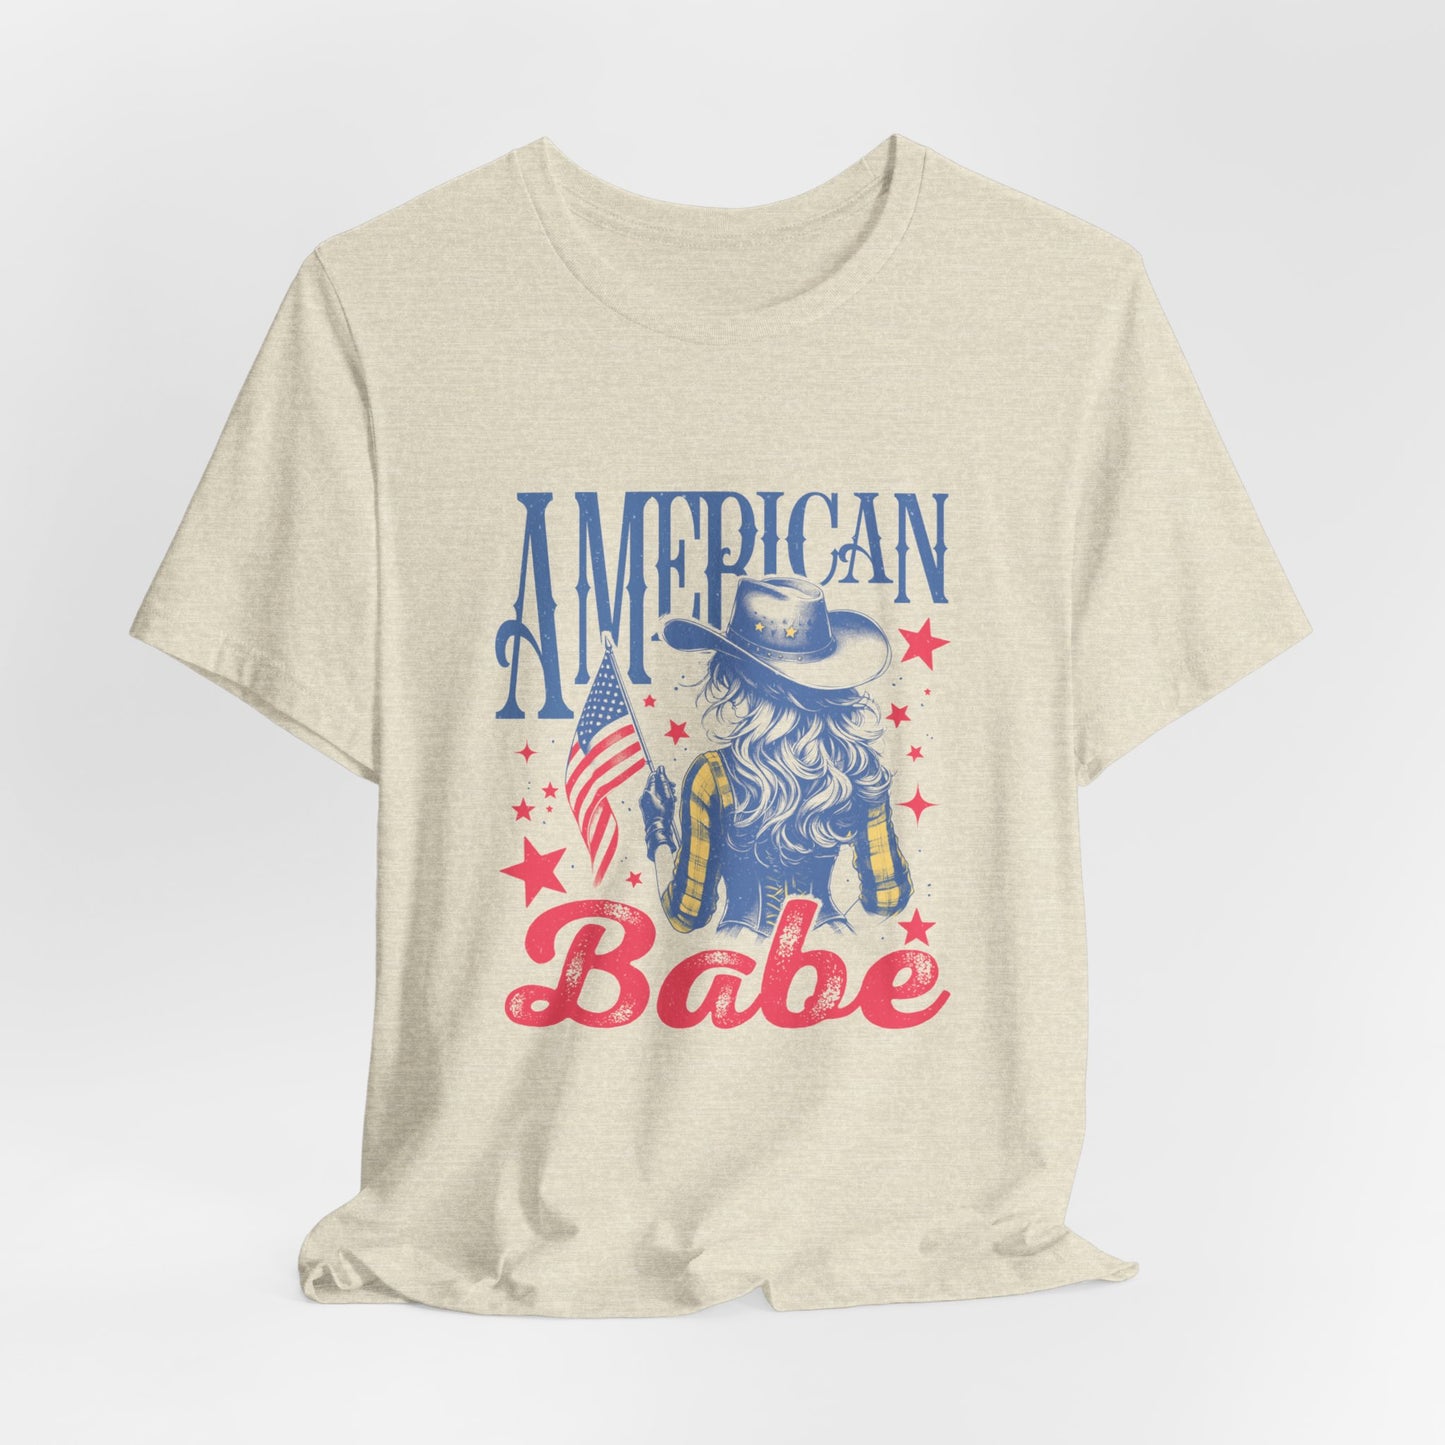 American Babe Women's Short Sleeve Tee